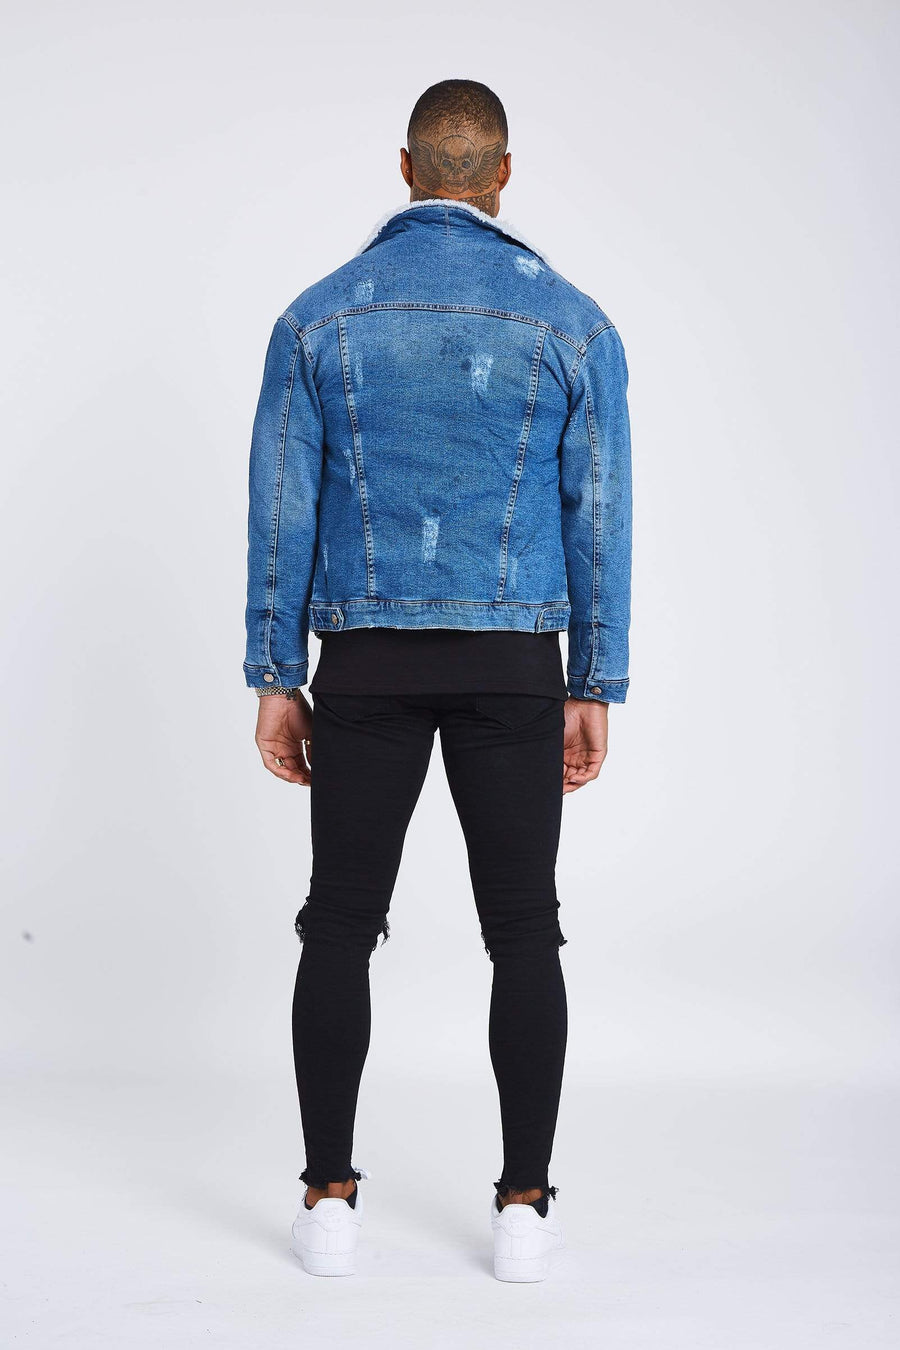 Legend London Jackets Mid Blue Wash Denim Jacket - Faux Fur Lined